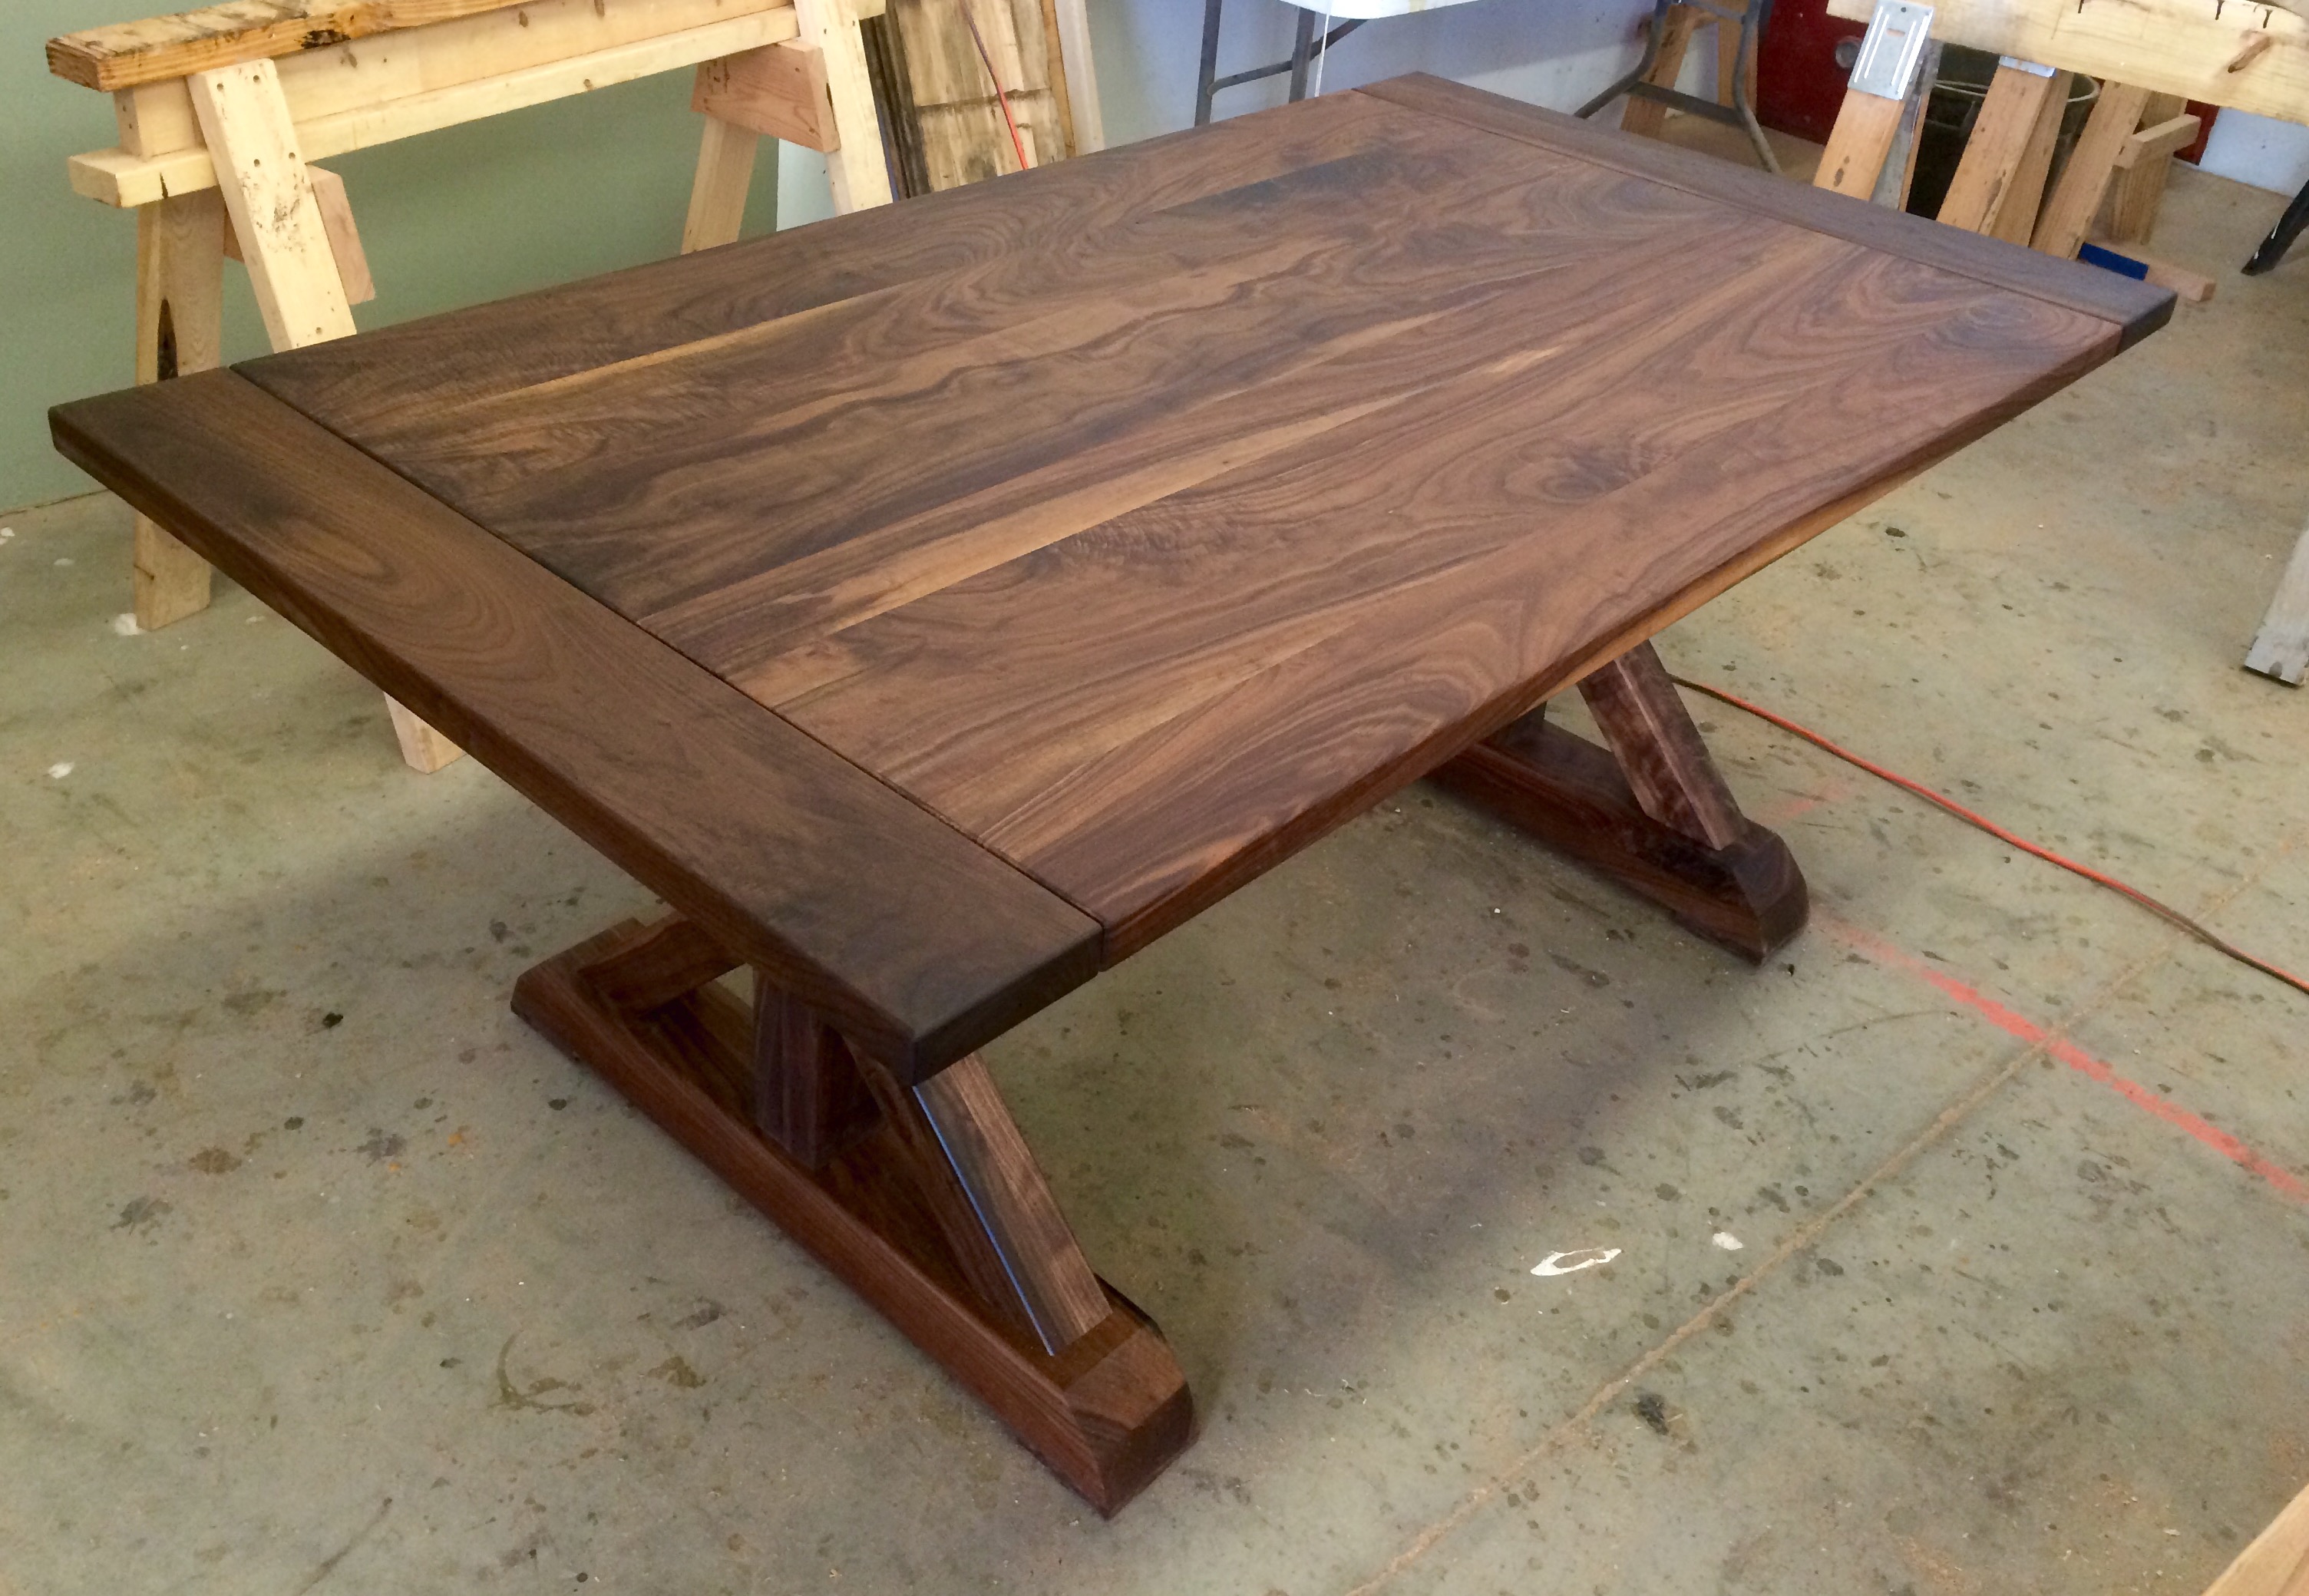 apt size kitchen table